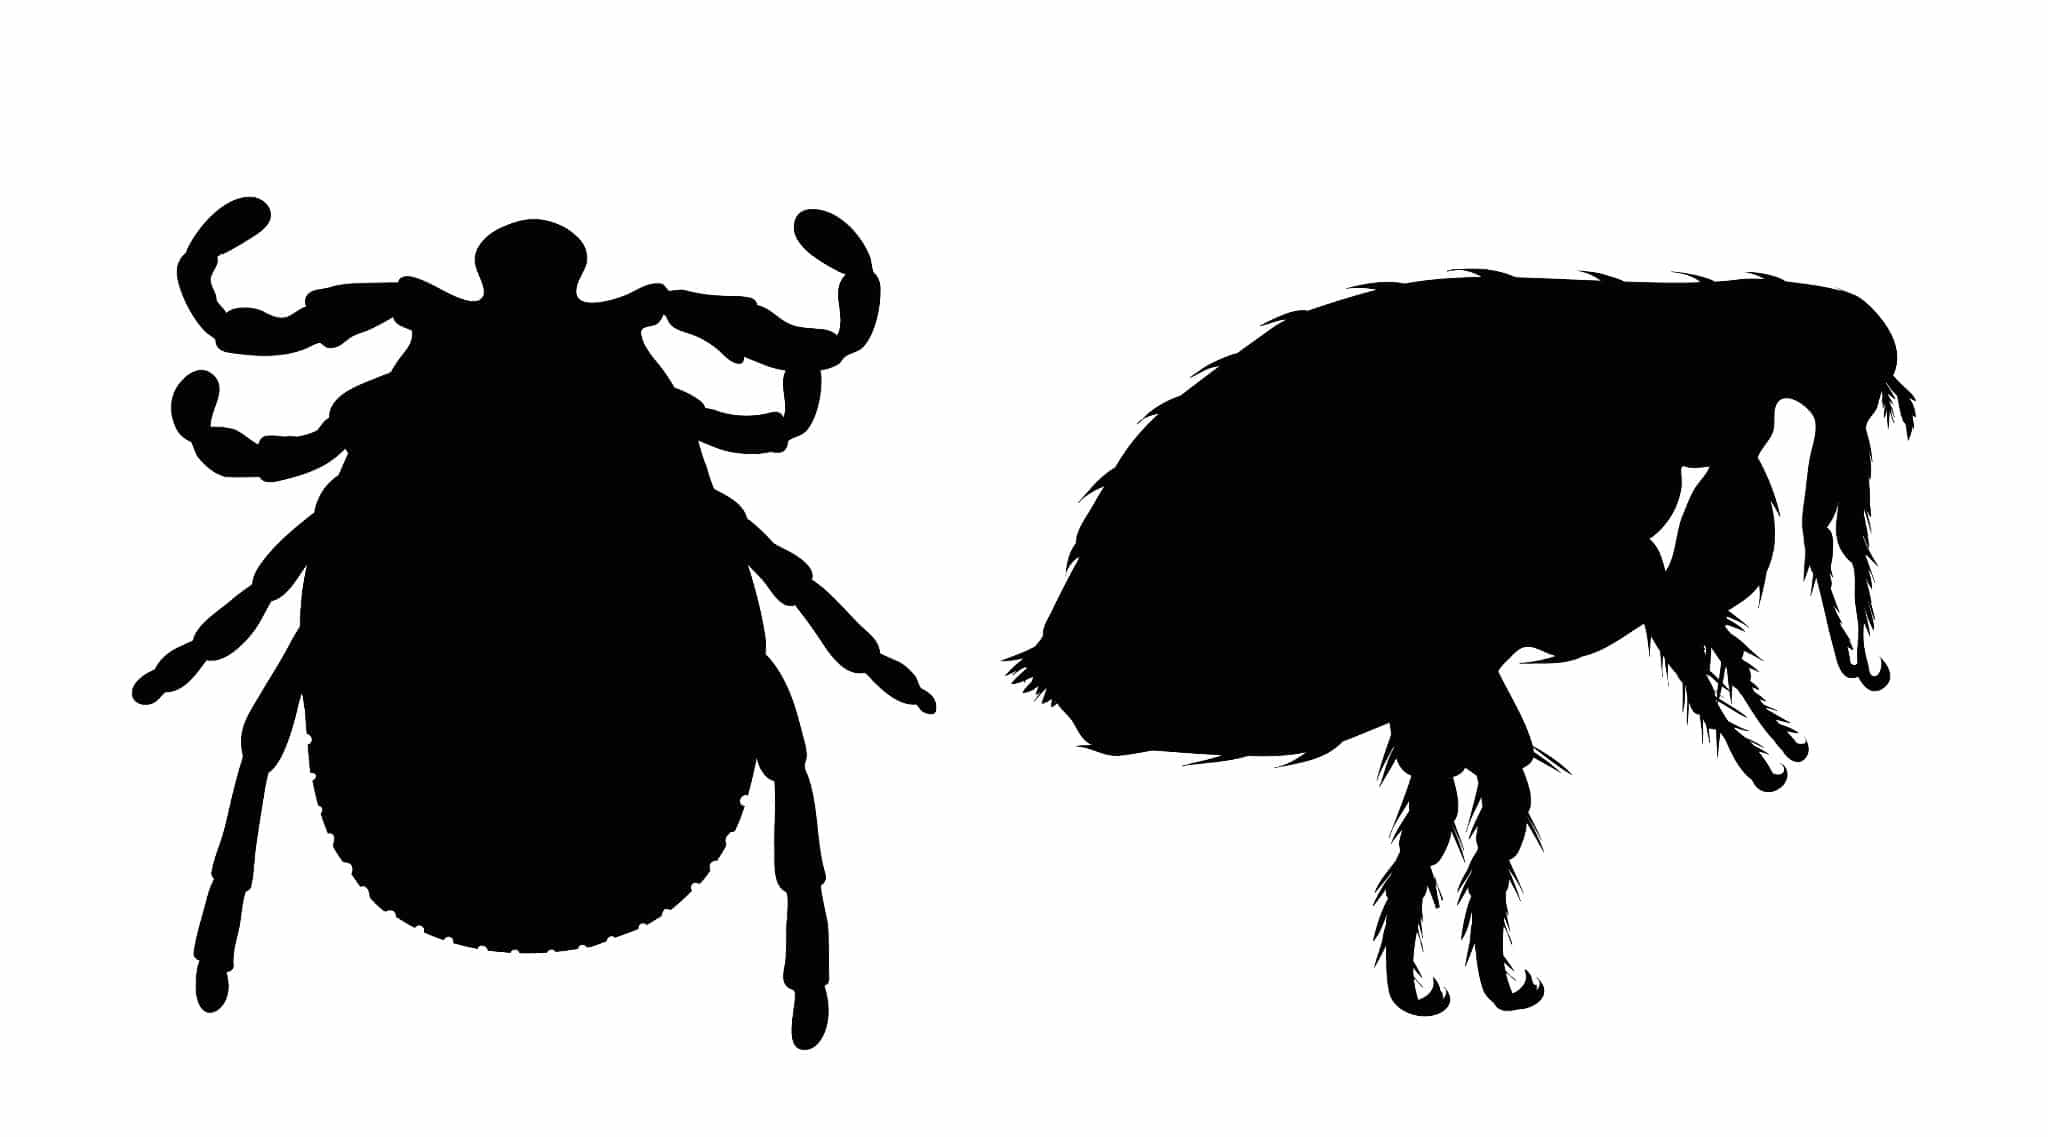 Outlines of a flea vs. tick